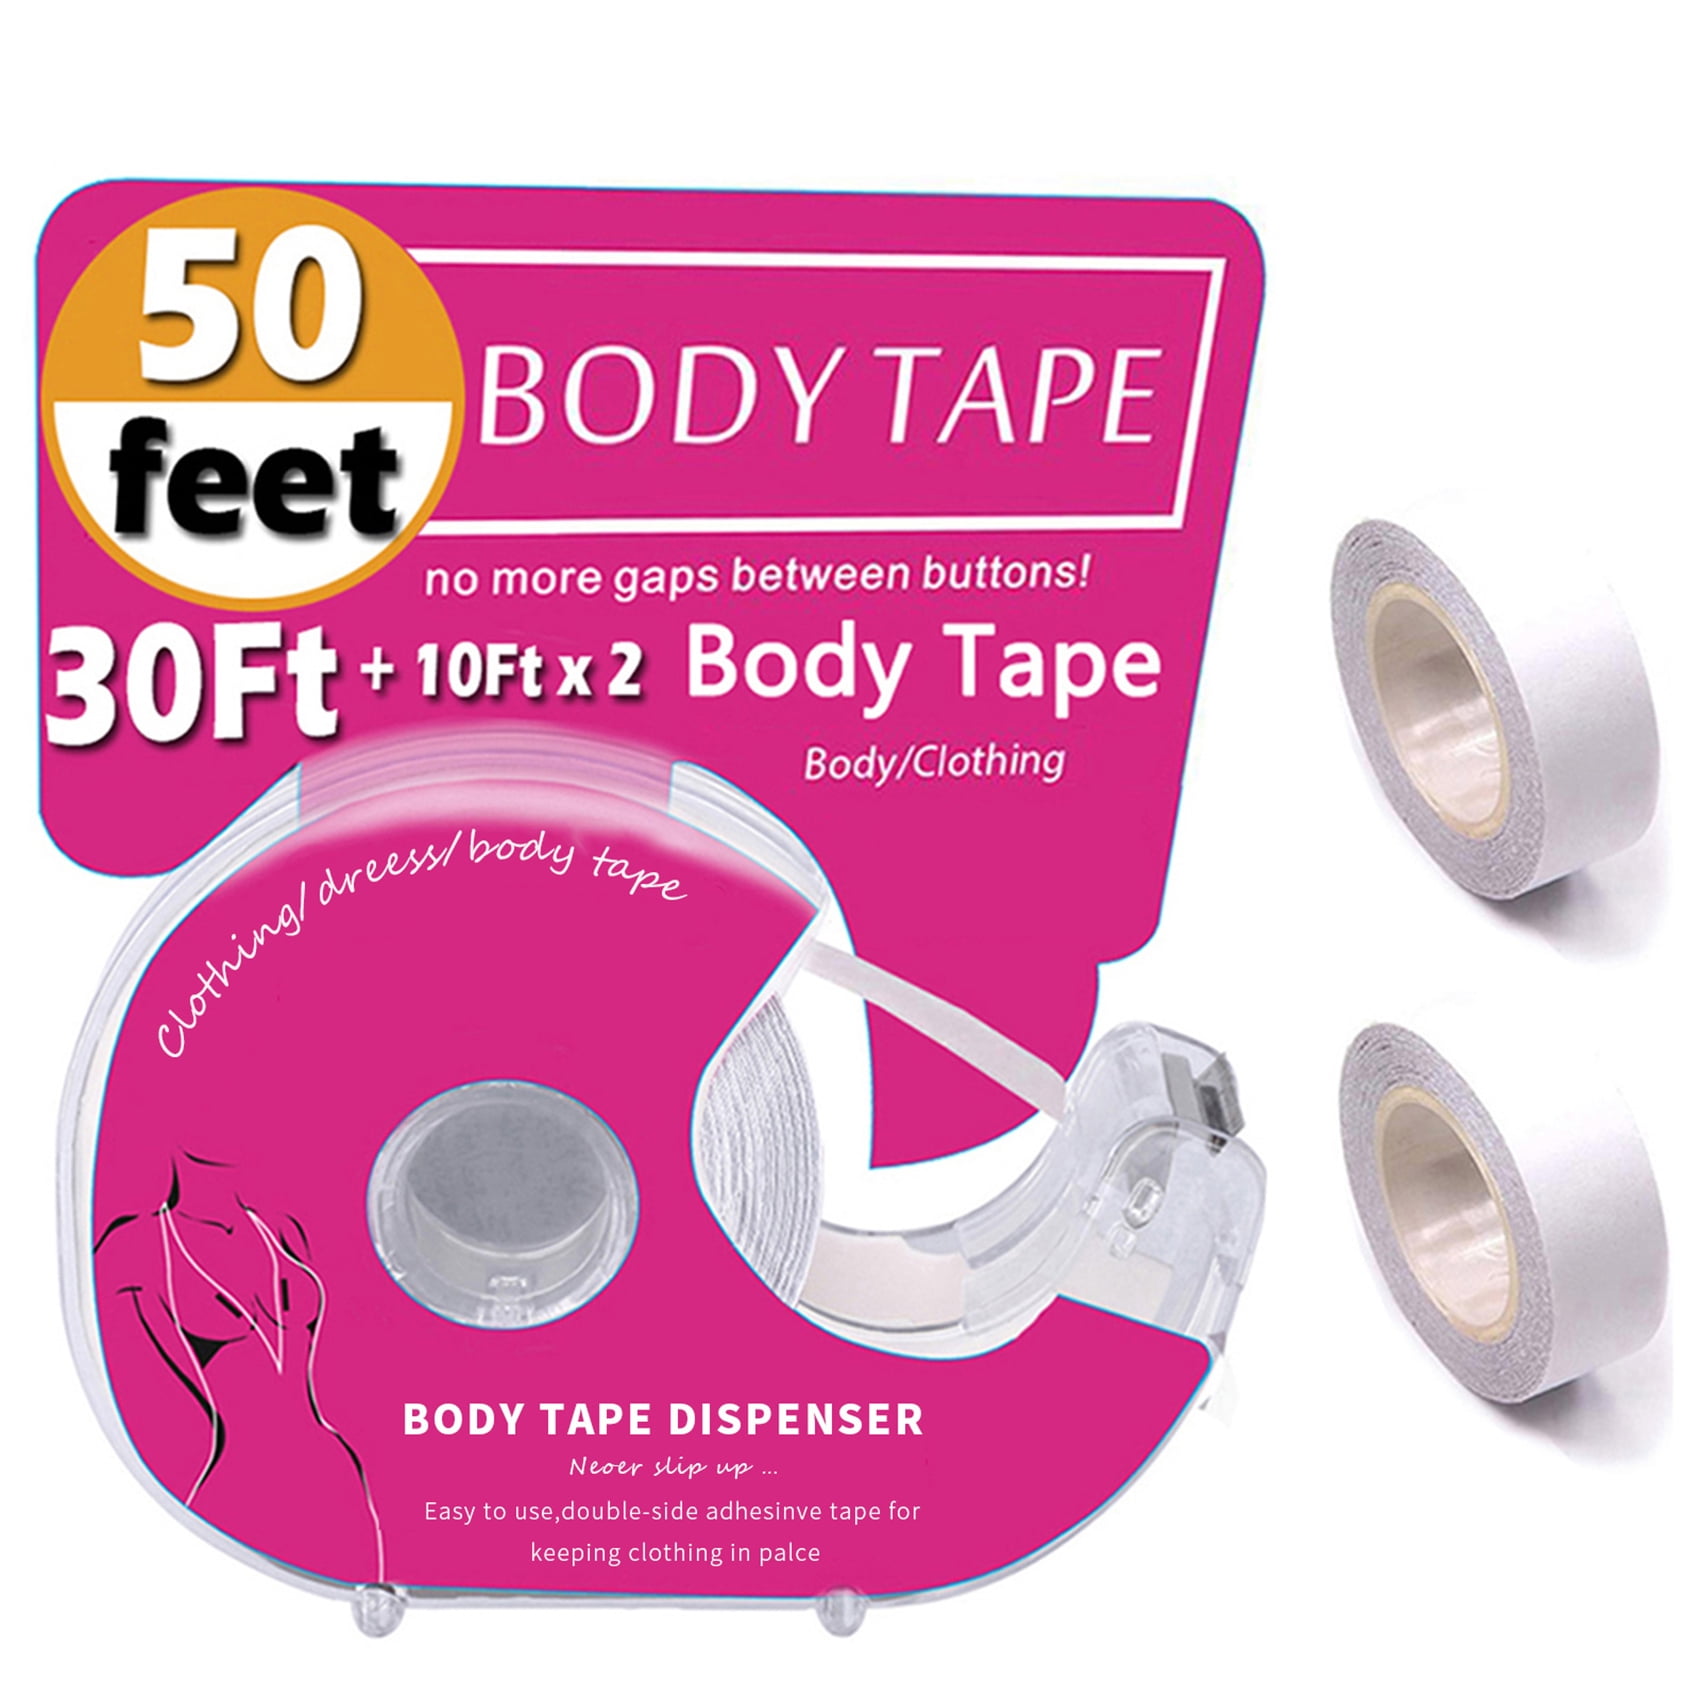 Sanfe Flix Fashion Tape, Fabric Tape & Body Tape, 36 piece Double